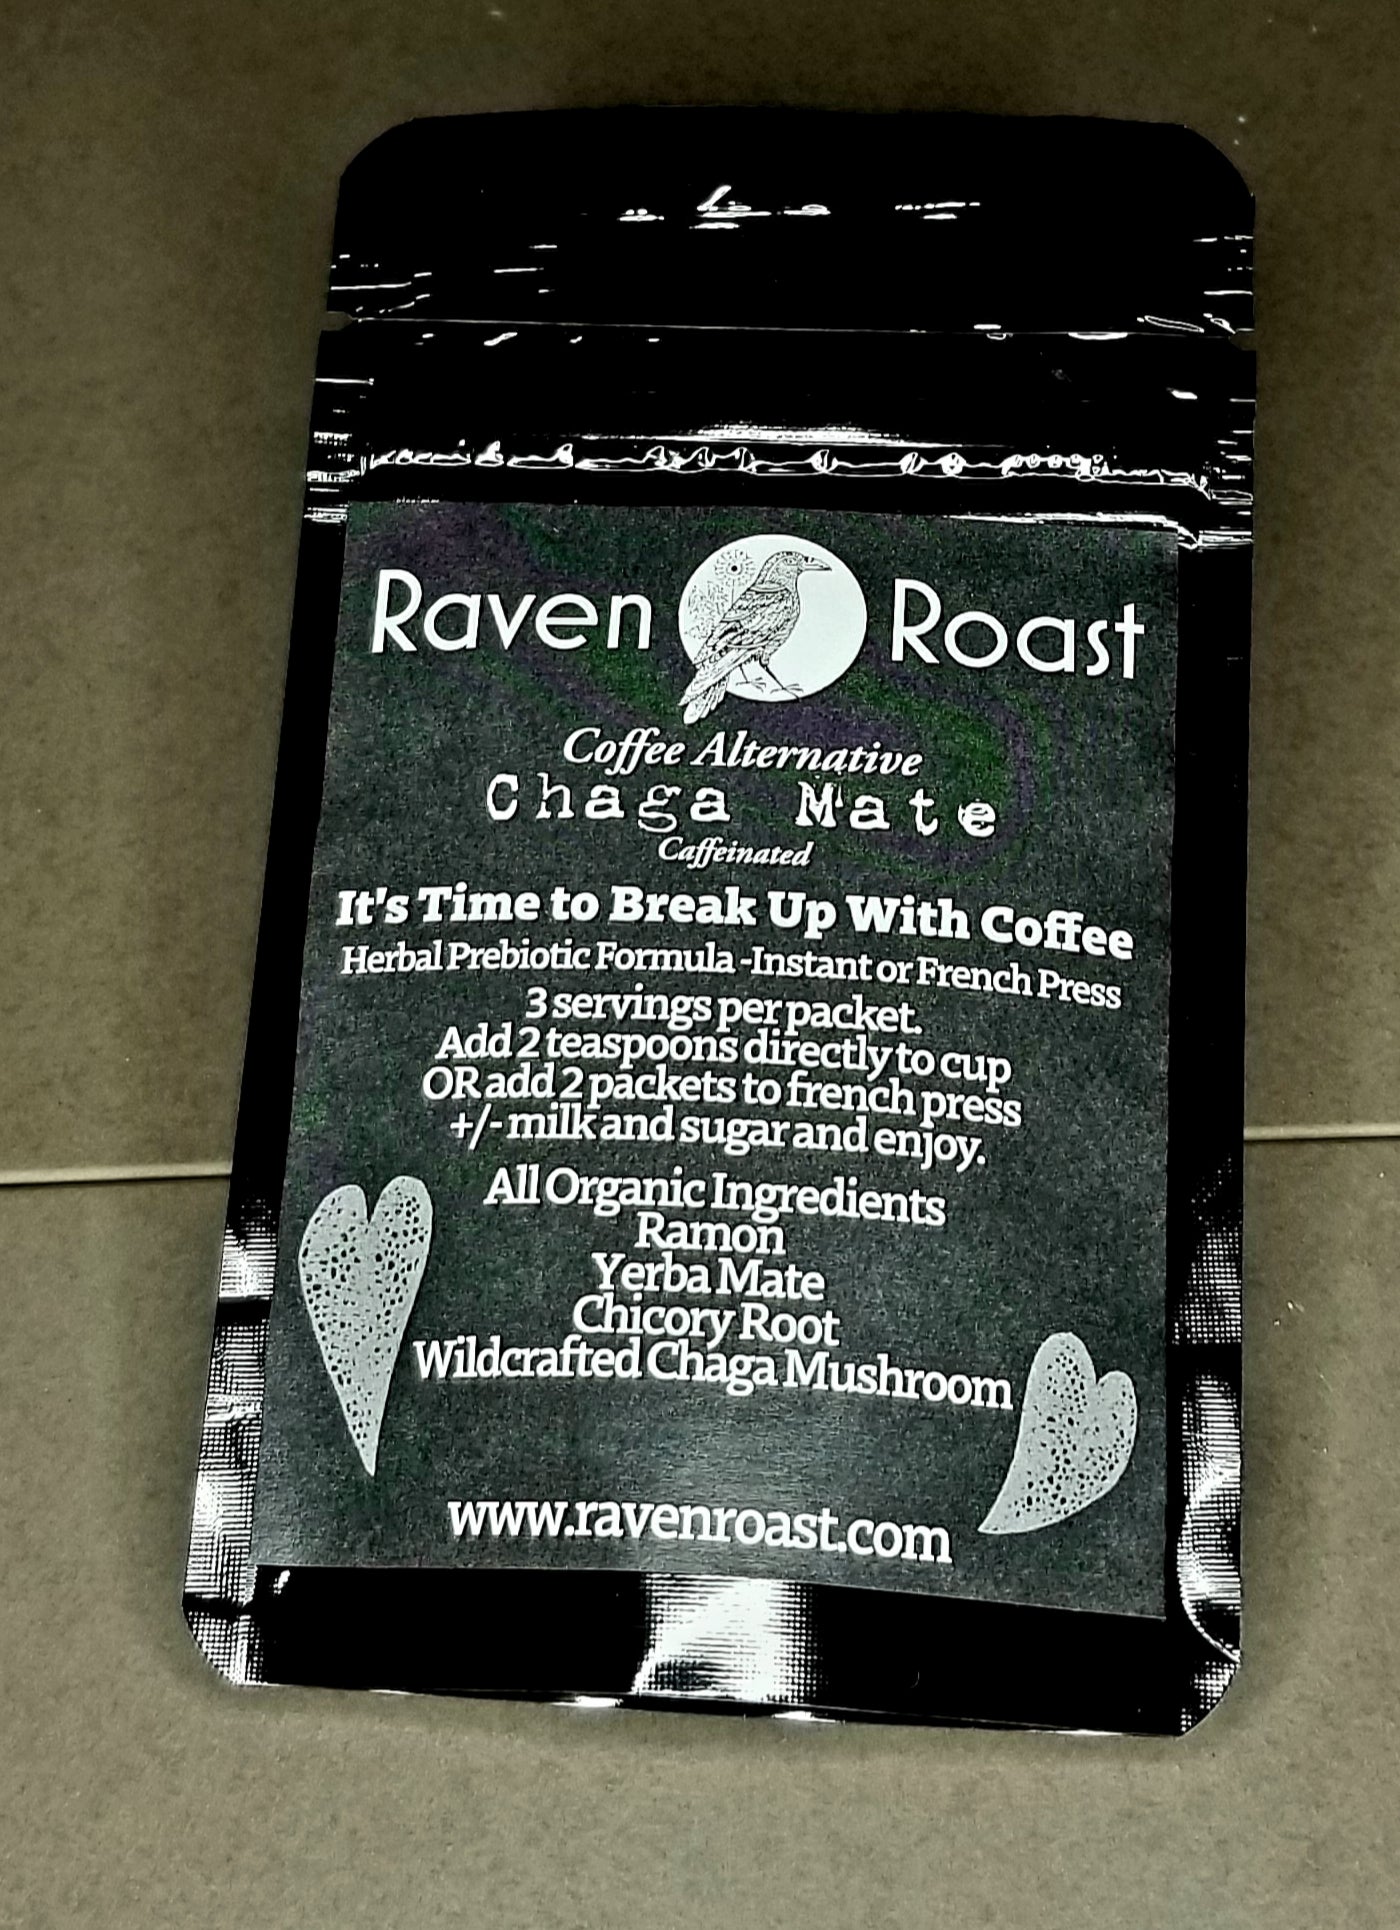 Chaga Mate, Caffeinated Coffee Alternative